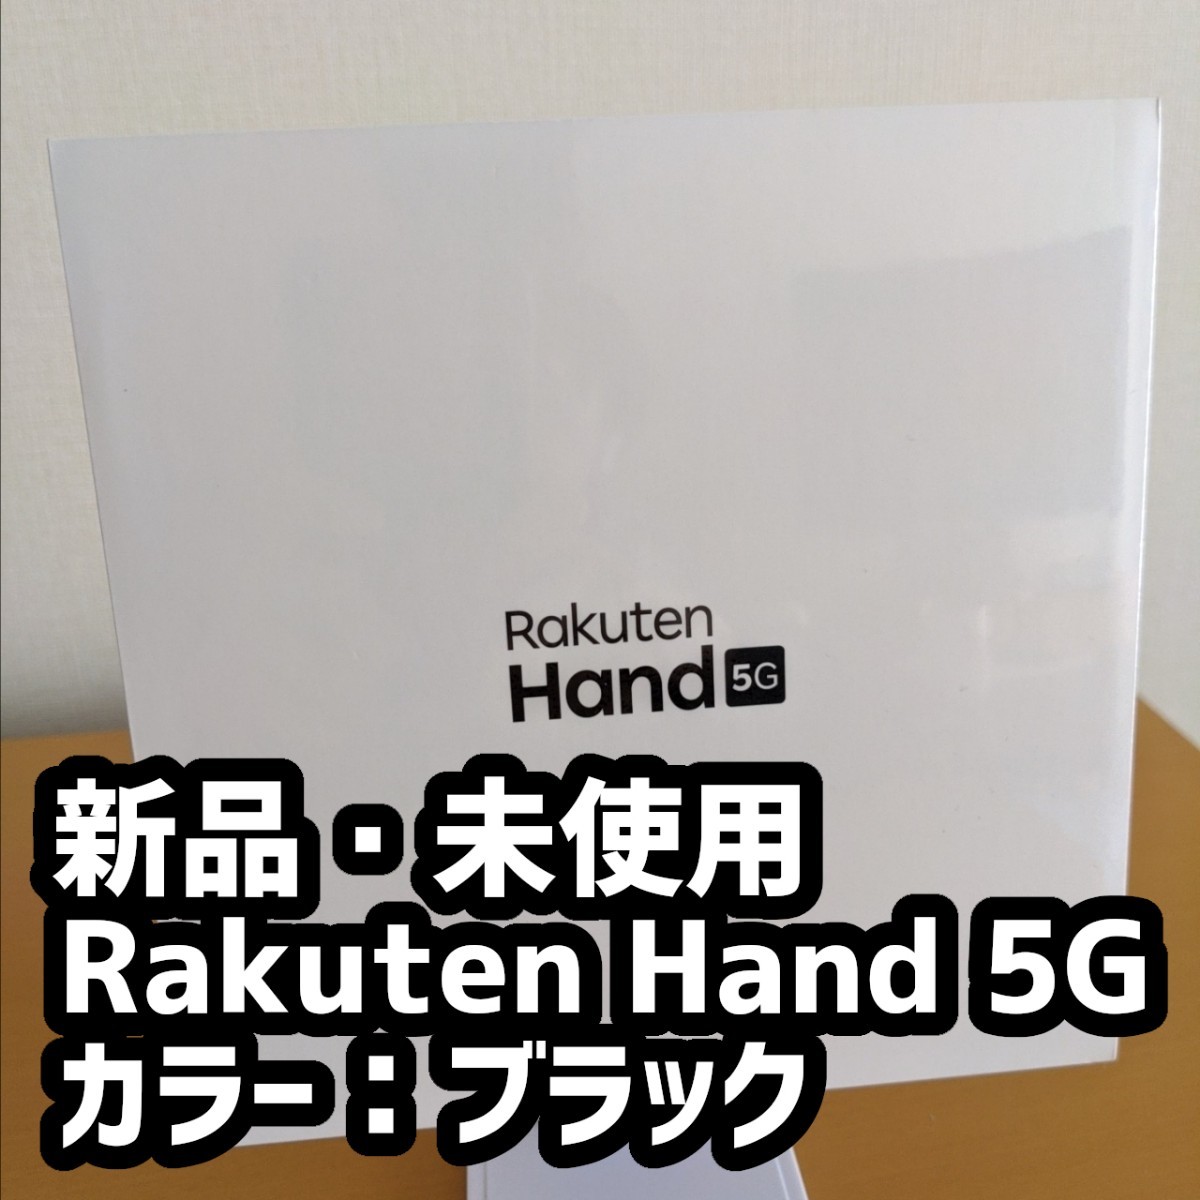 Rakuten Hand 5G 楽天モバイル 未開封品 ブラック